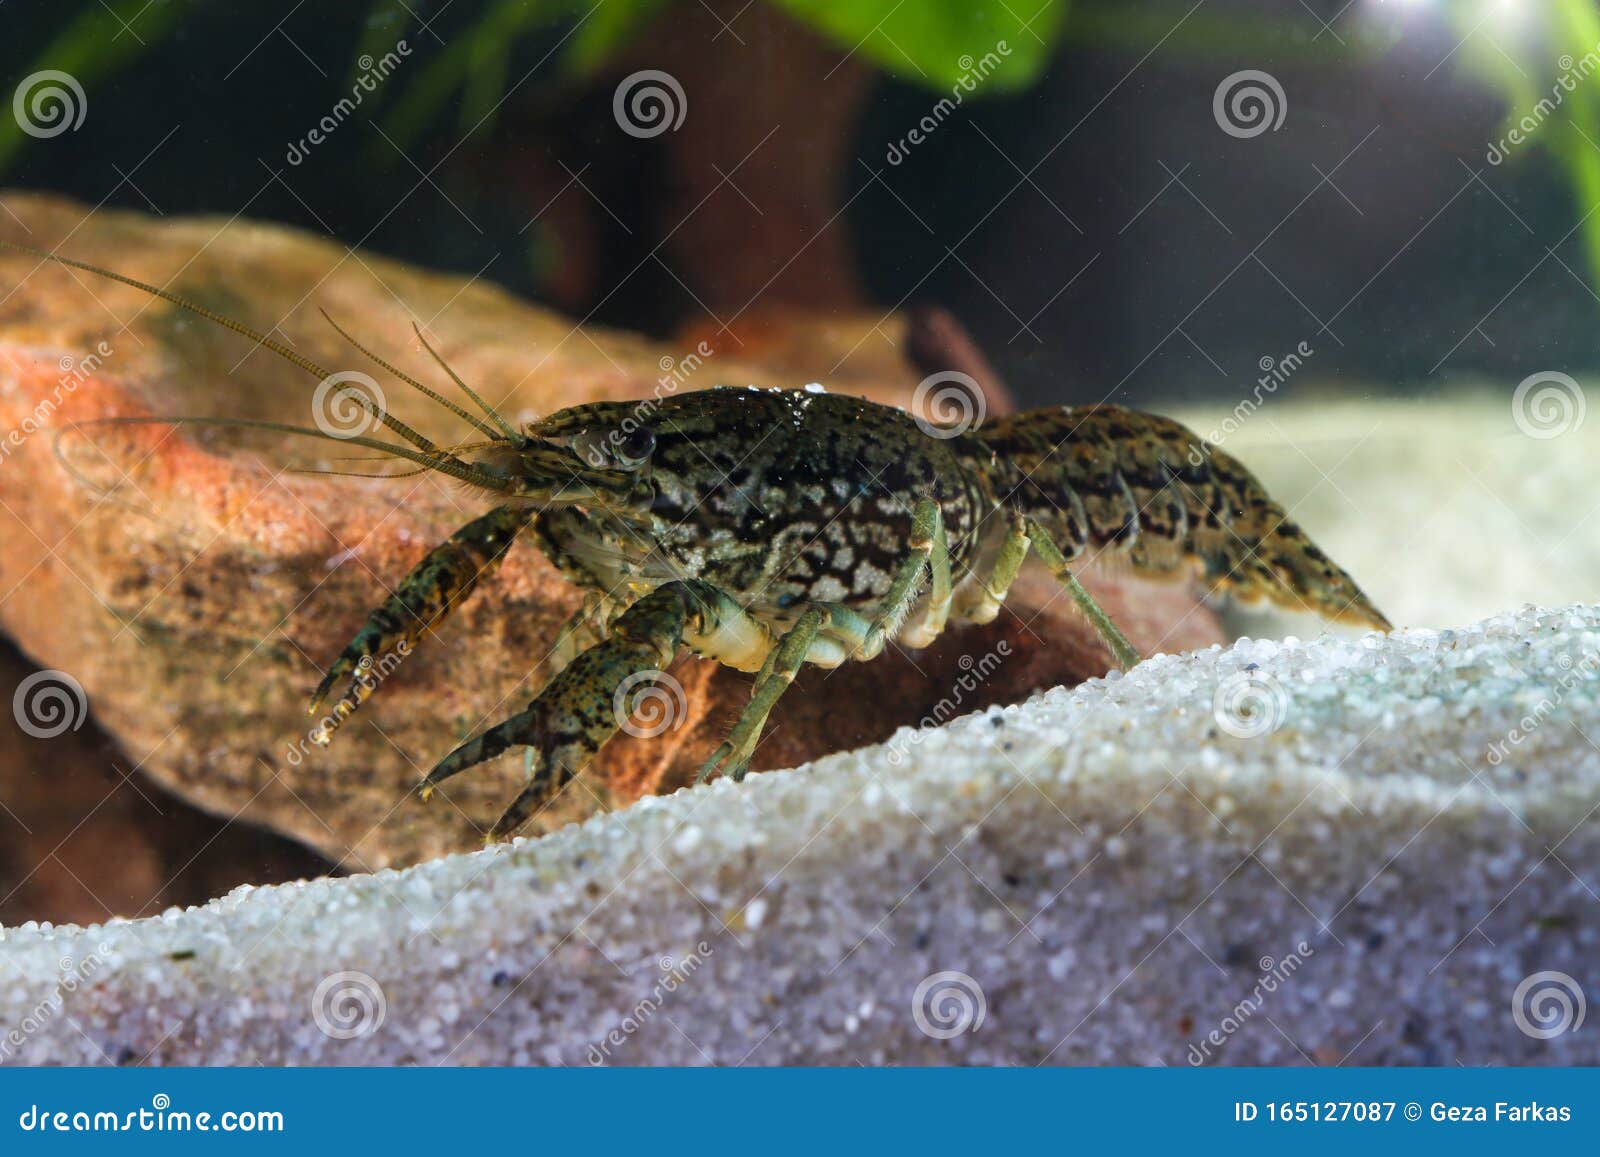 pest marbled crayfish, procambarus fallax forma virginalis in the pond